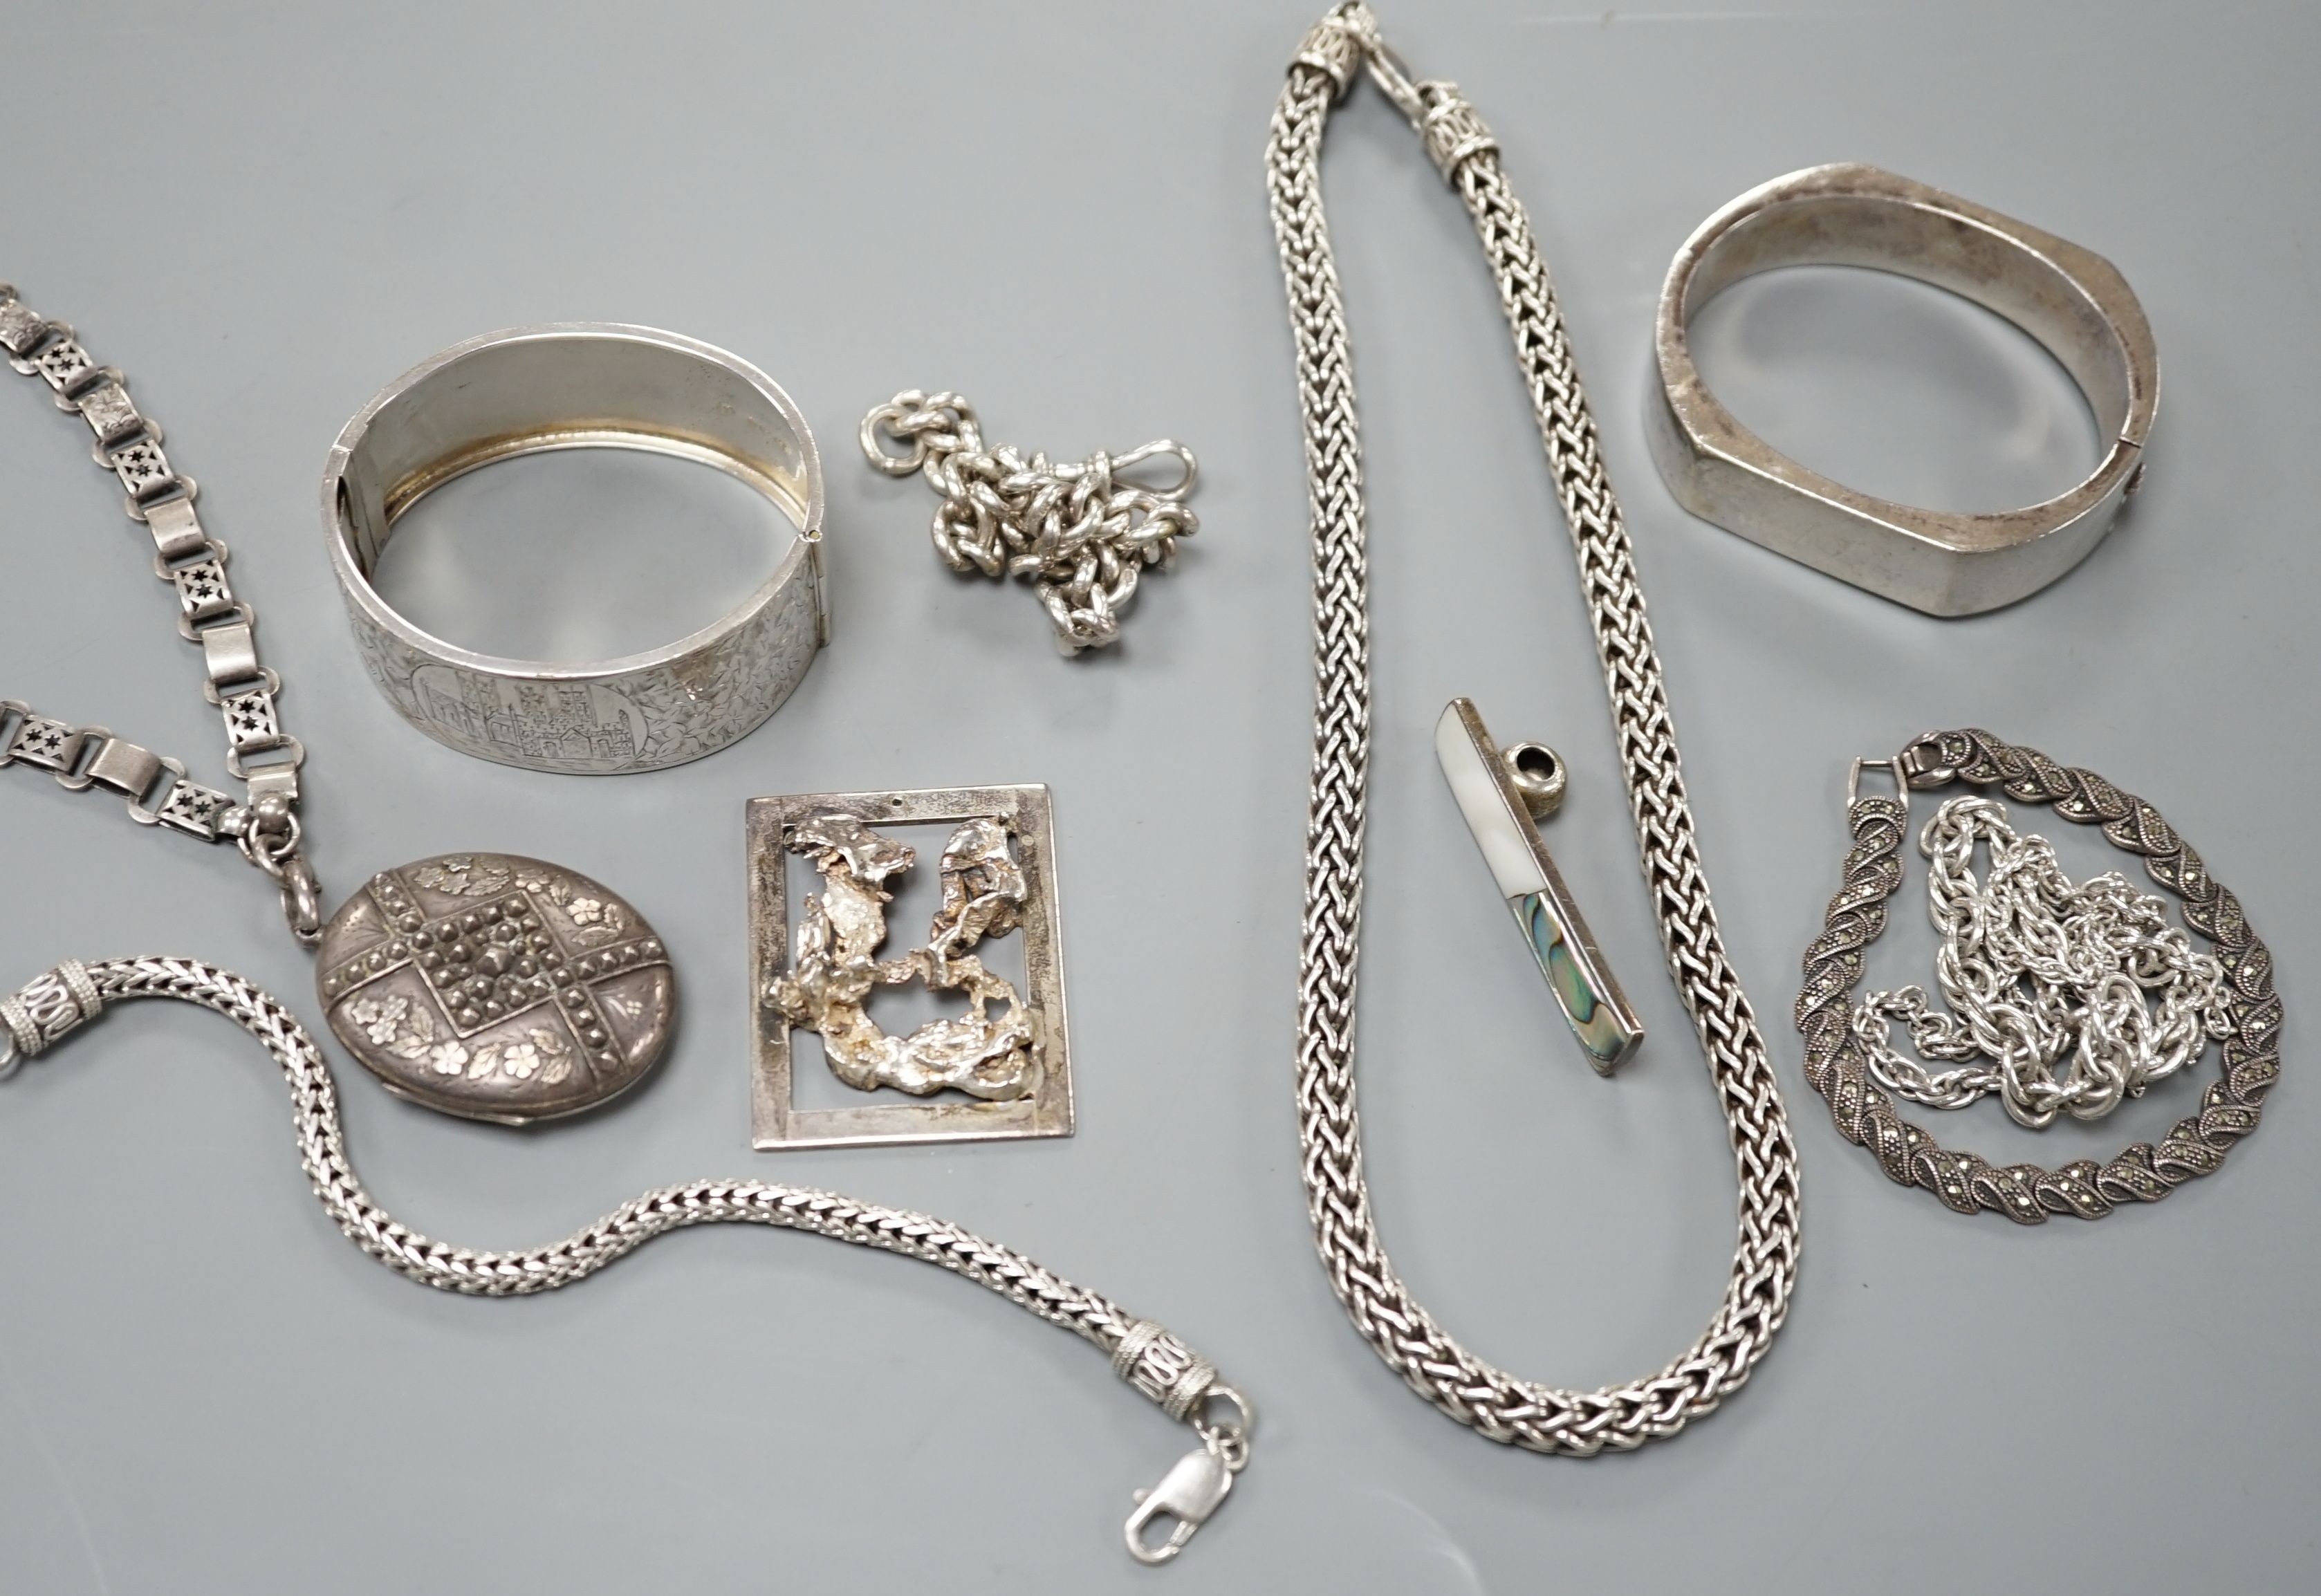 Assorted white metal jewellery including oval locket on albertina, 925 necklace and bracelet, bangles bracelets etc.